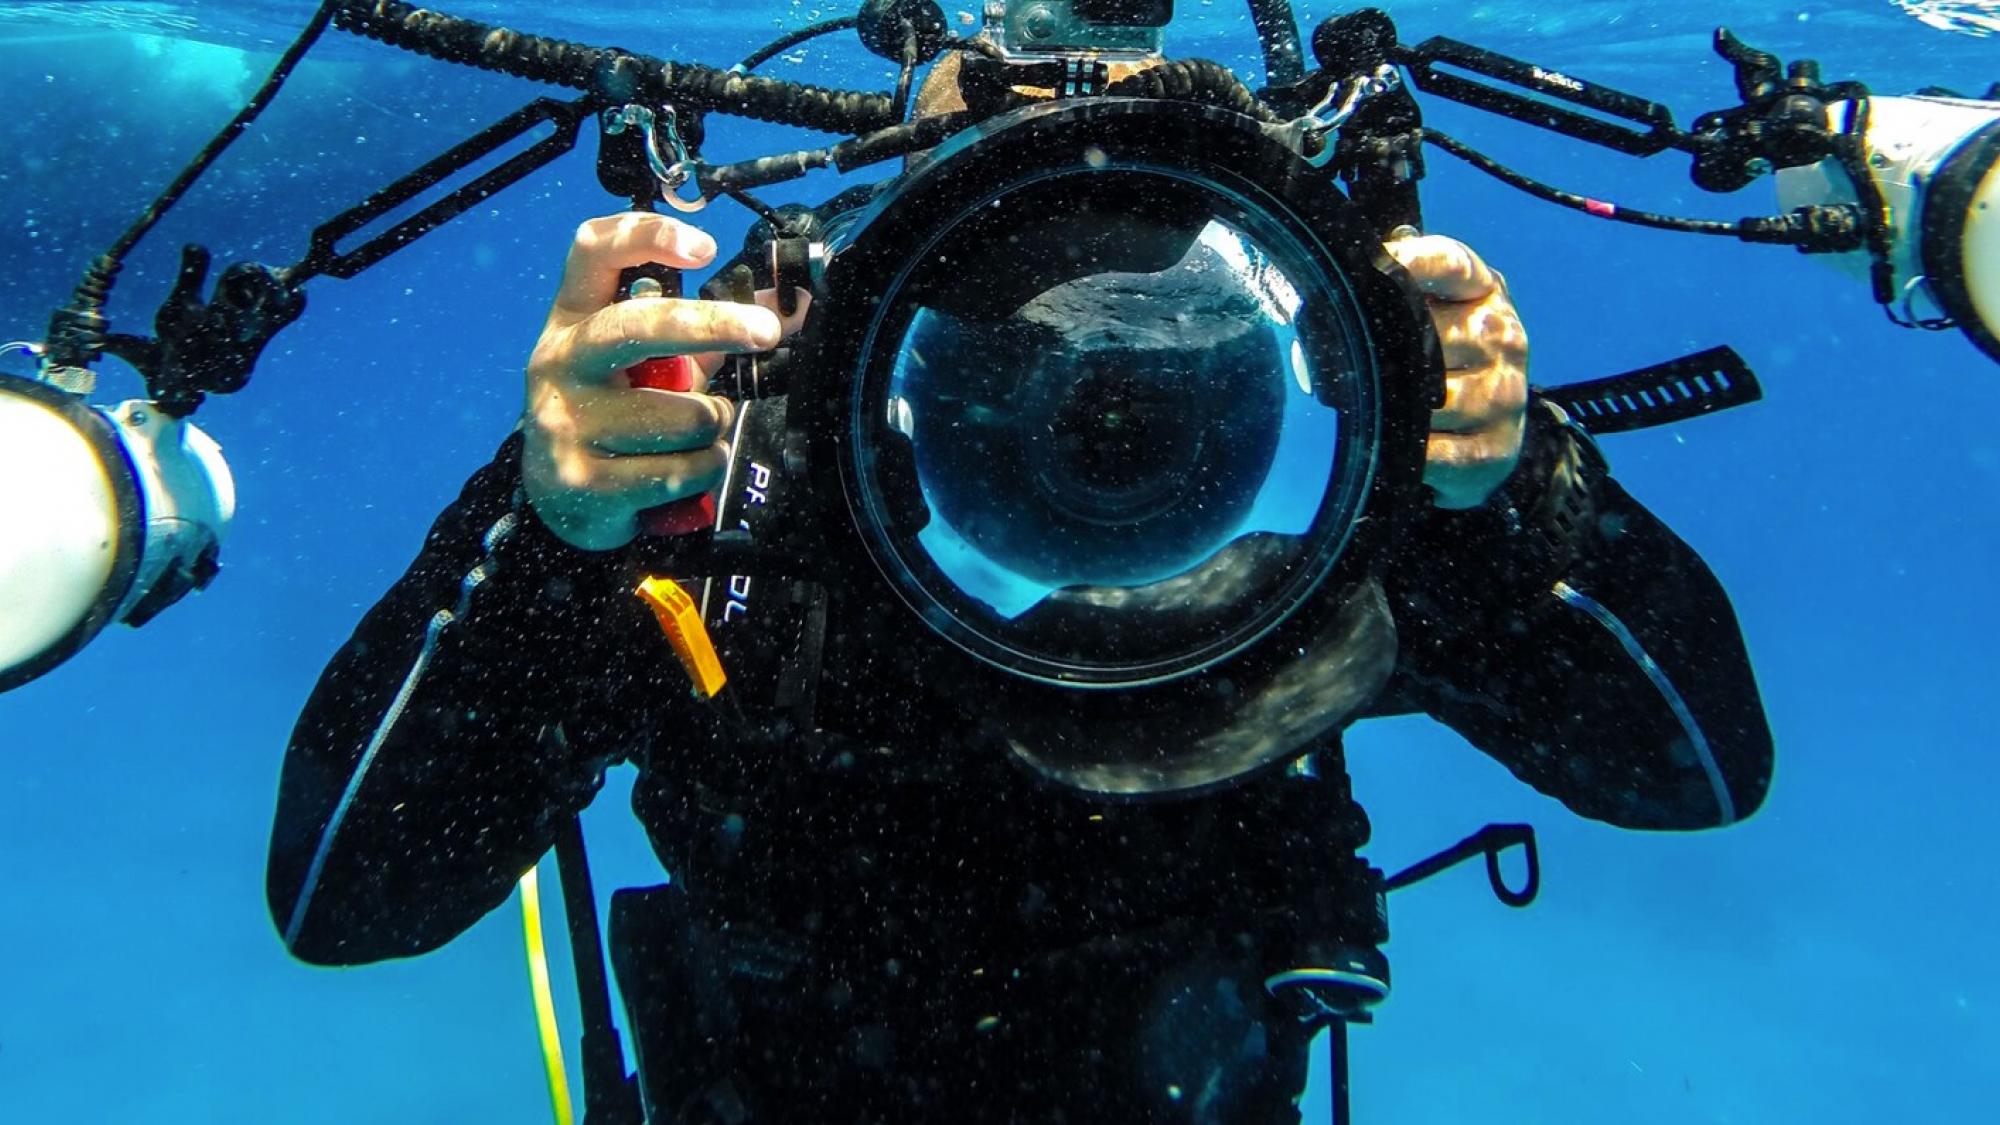 Appareil photo/camera sous-marin micro 3.0 - FADIS DIVING